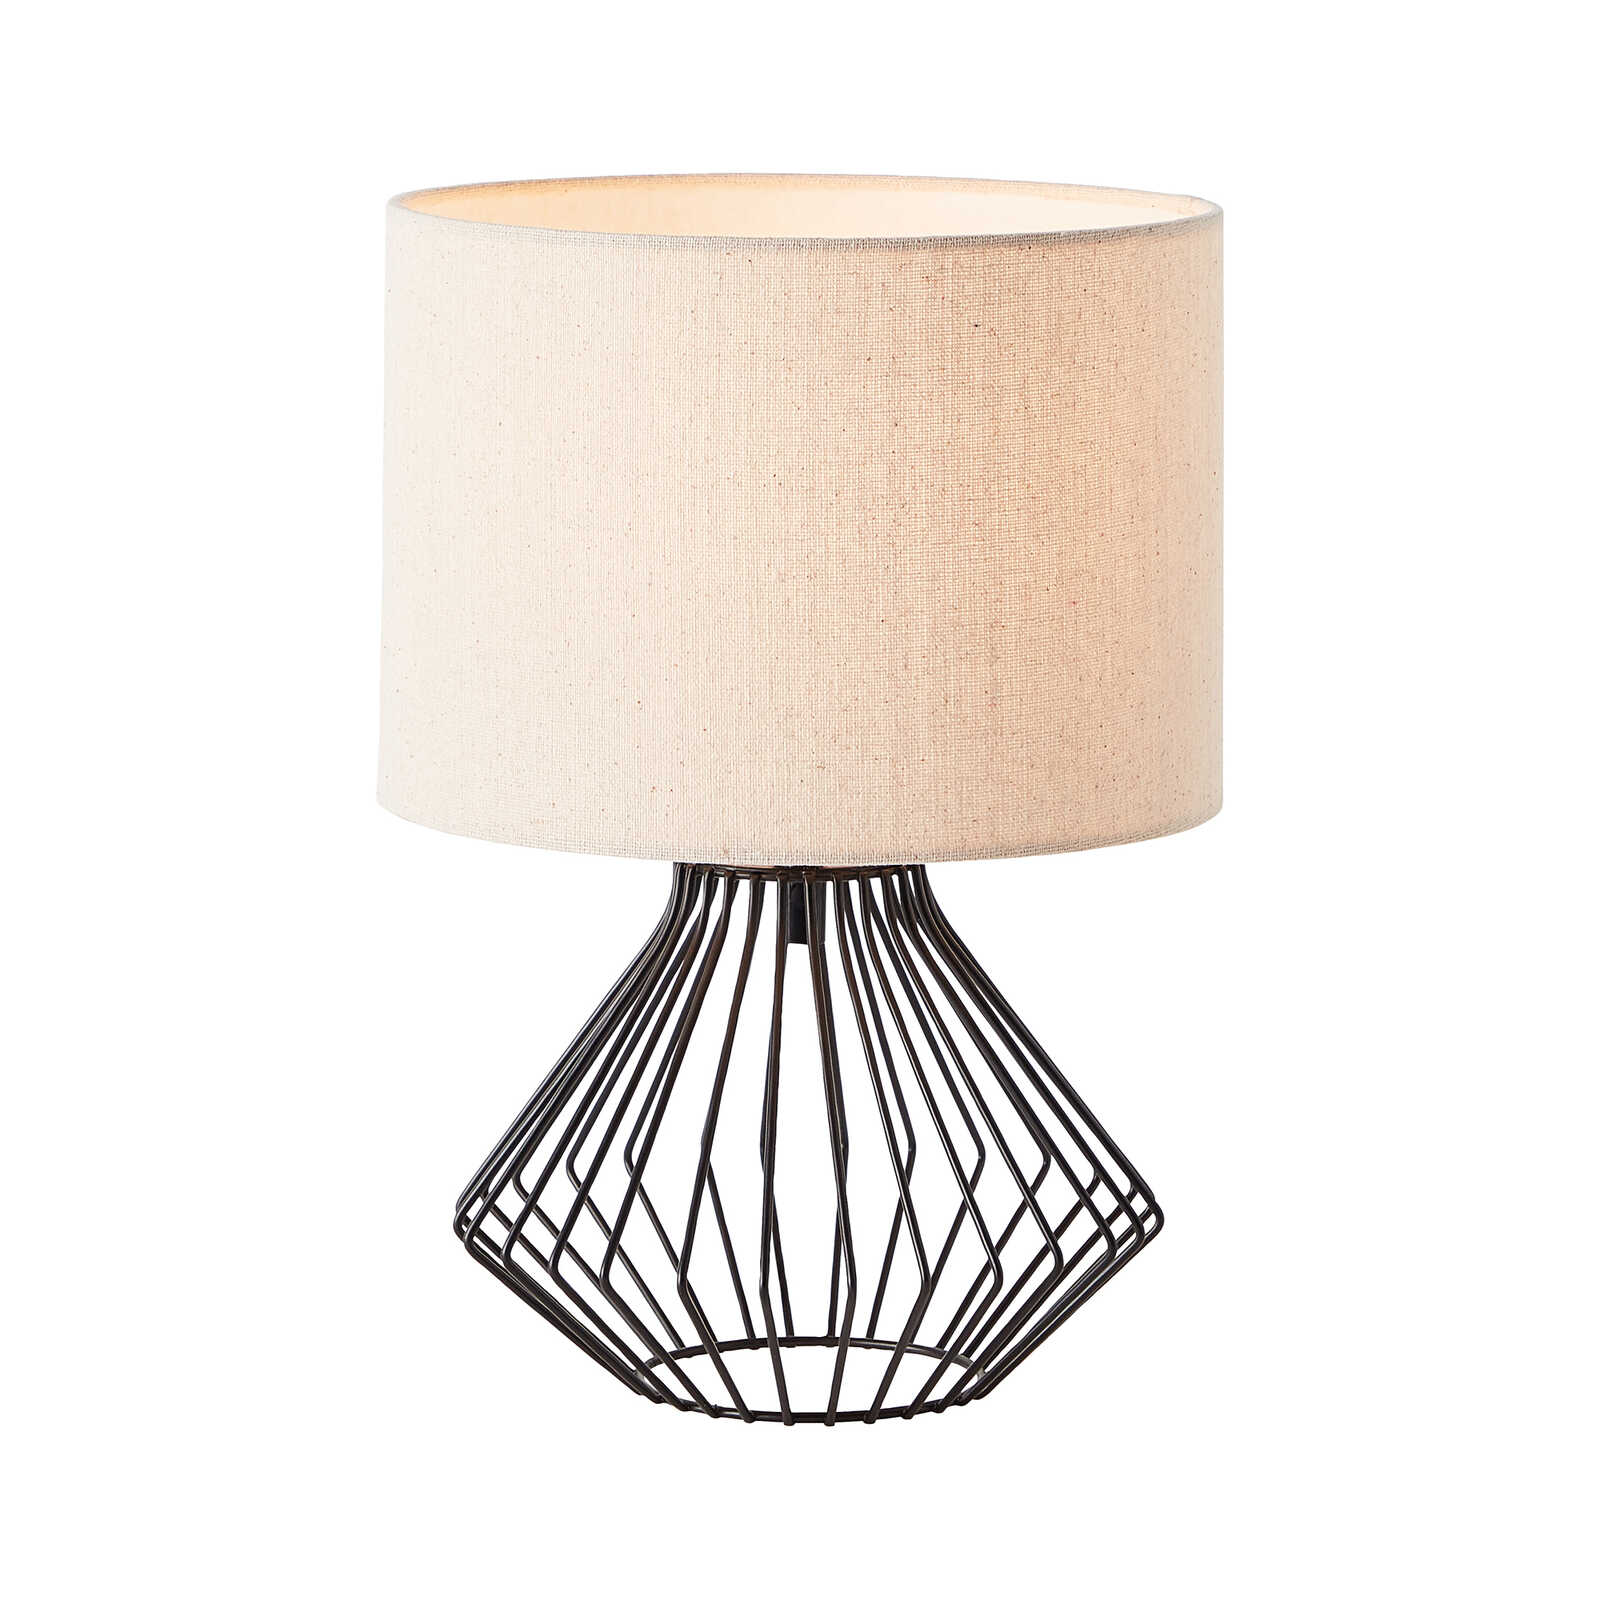 Textile table lamp - Liana - Brown
